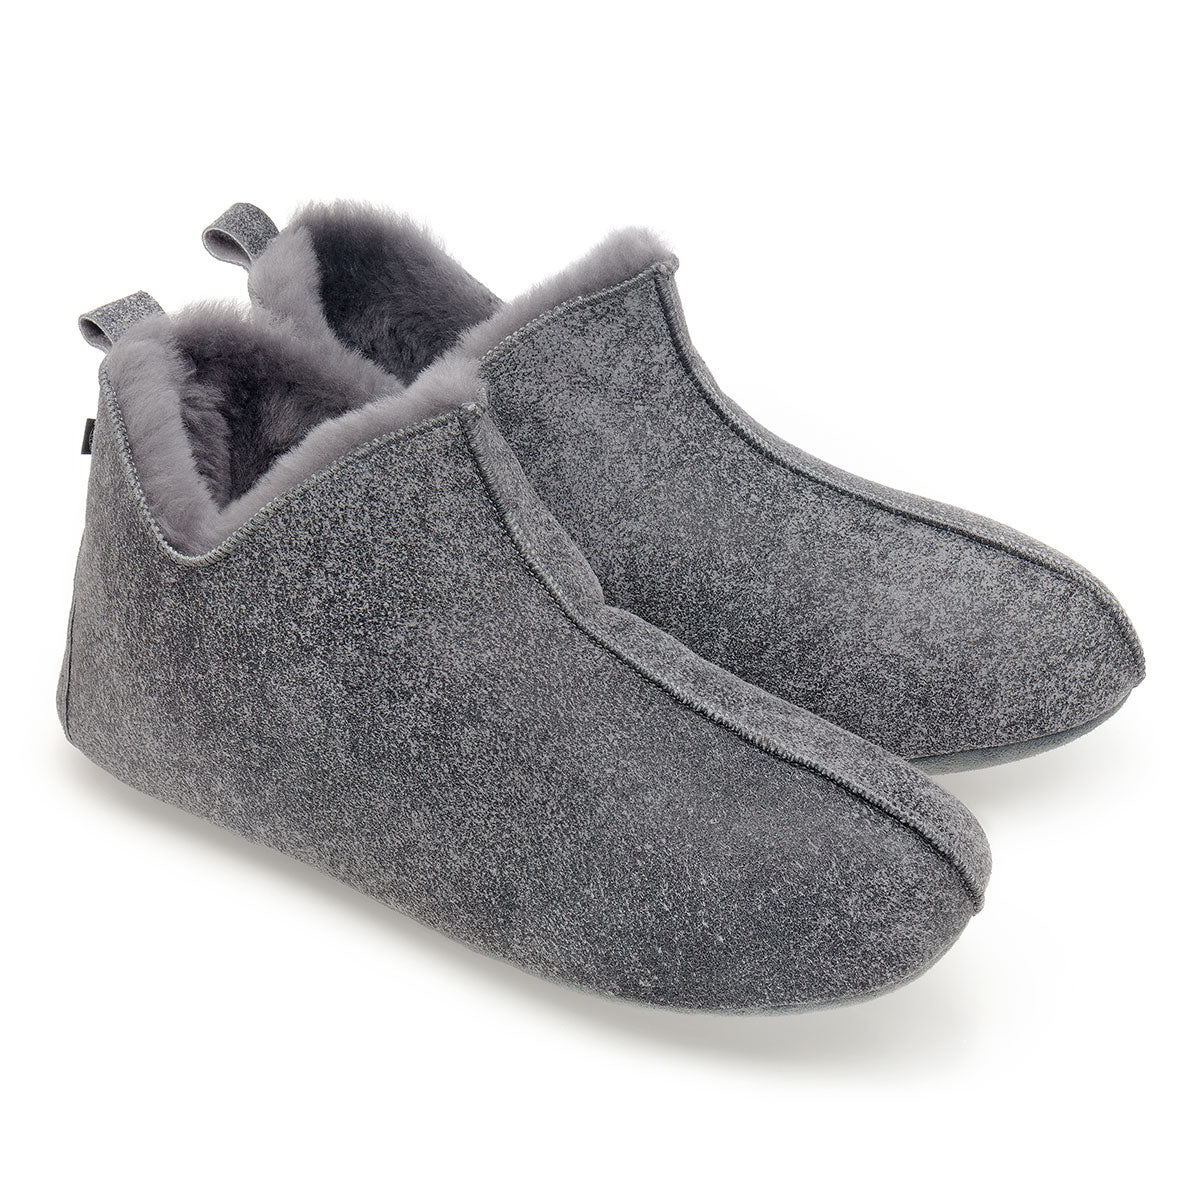 Berit Sheepskin Slippers - Grey Distressed Leather